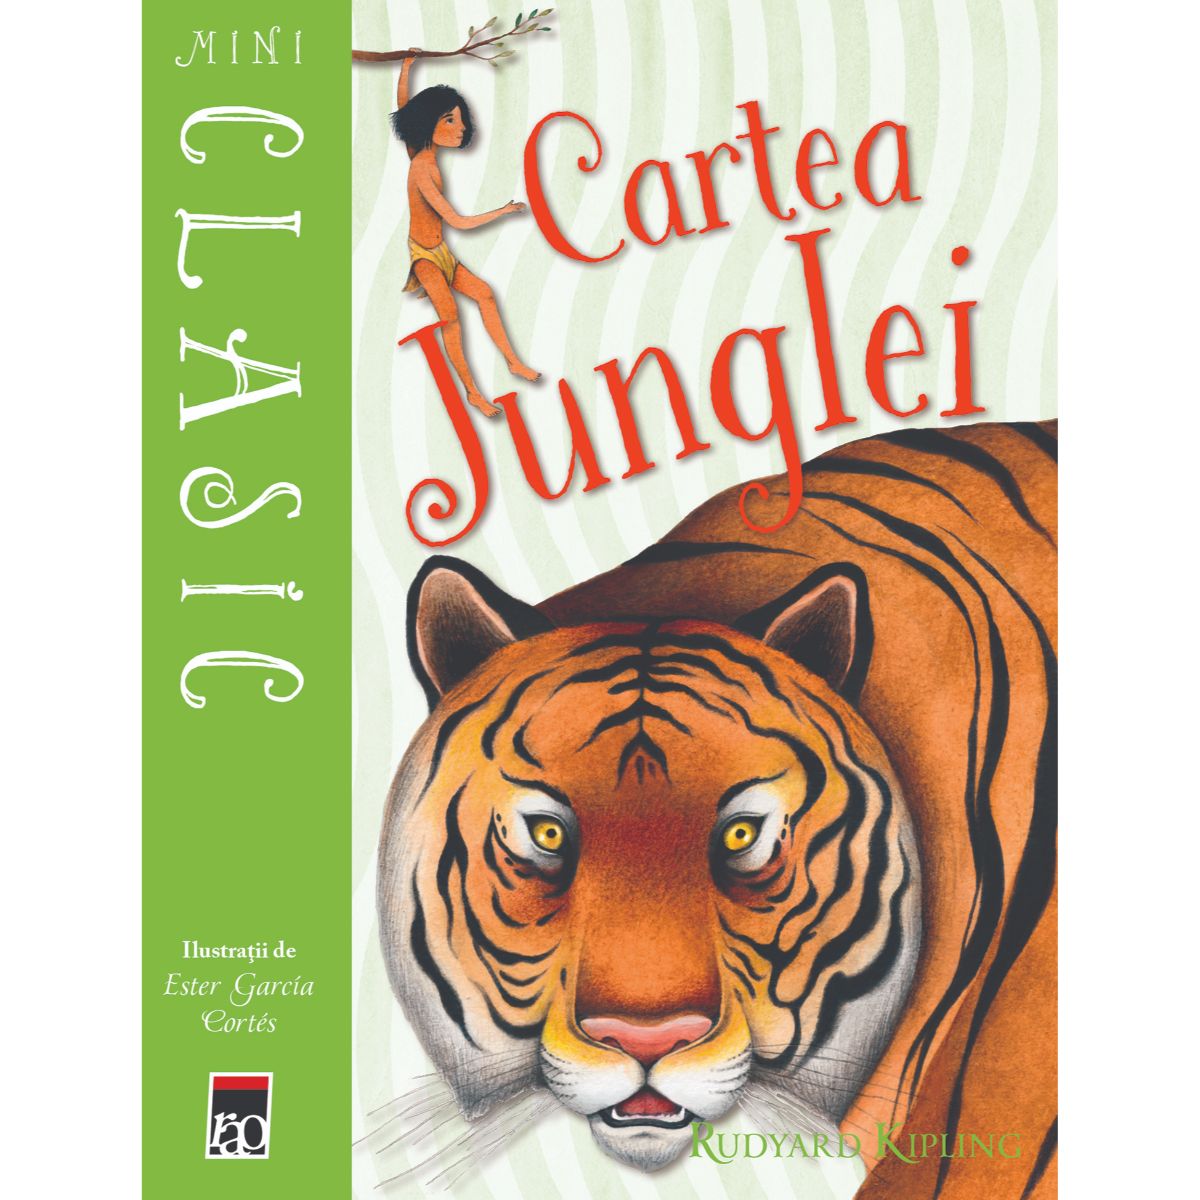 Mini Clasic. Cartea junglei, Rudyard Kipling Carti pentru copii 2023-06-02